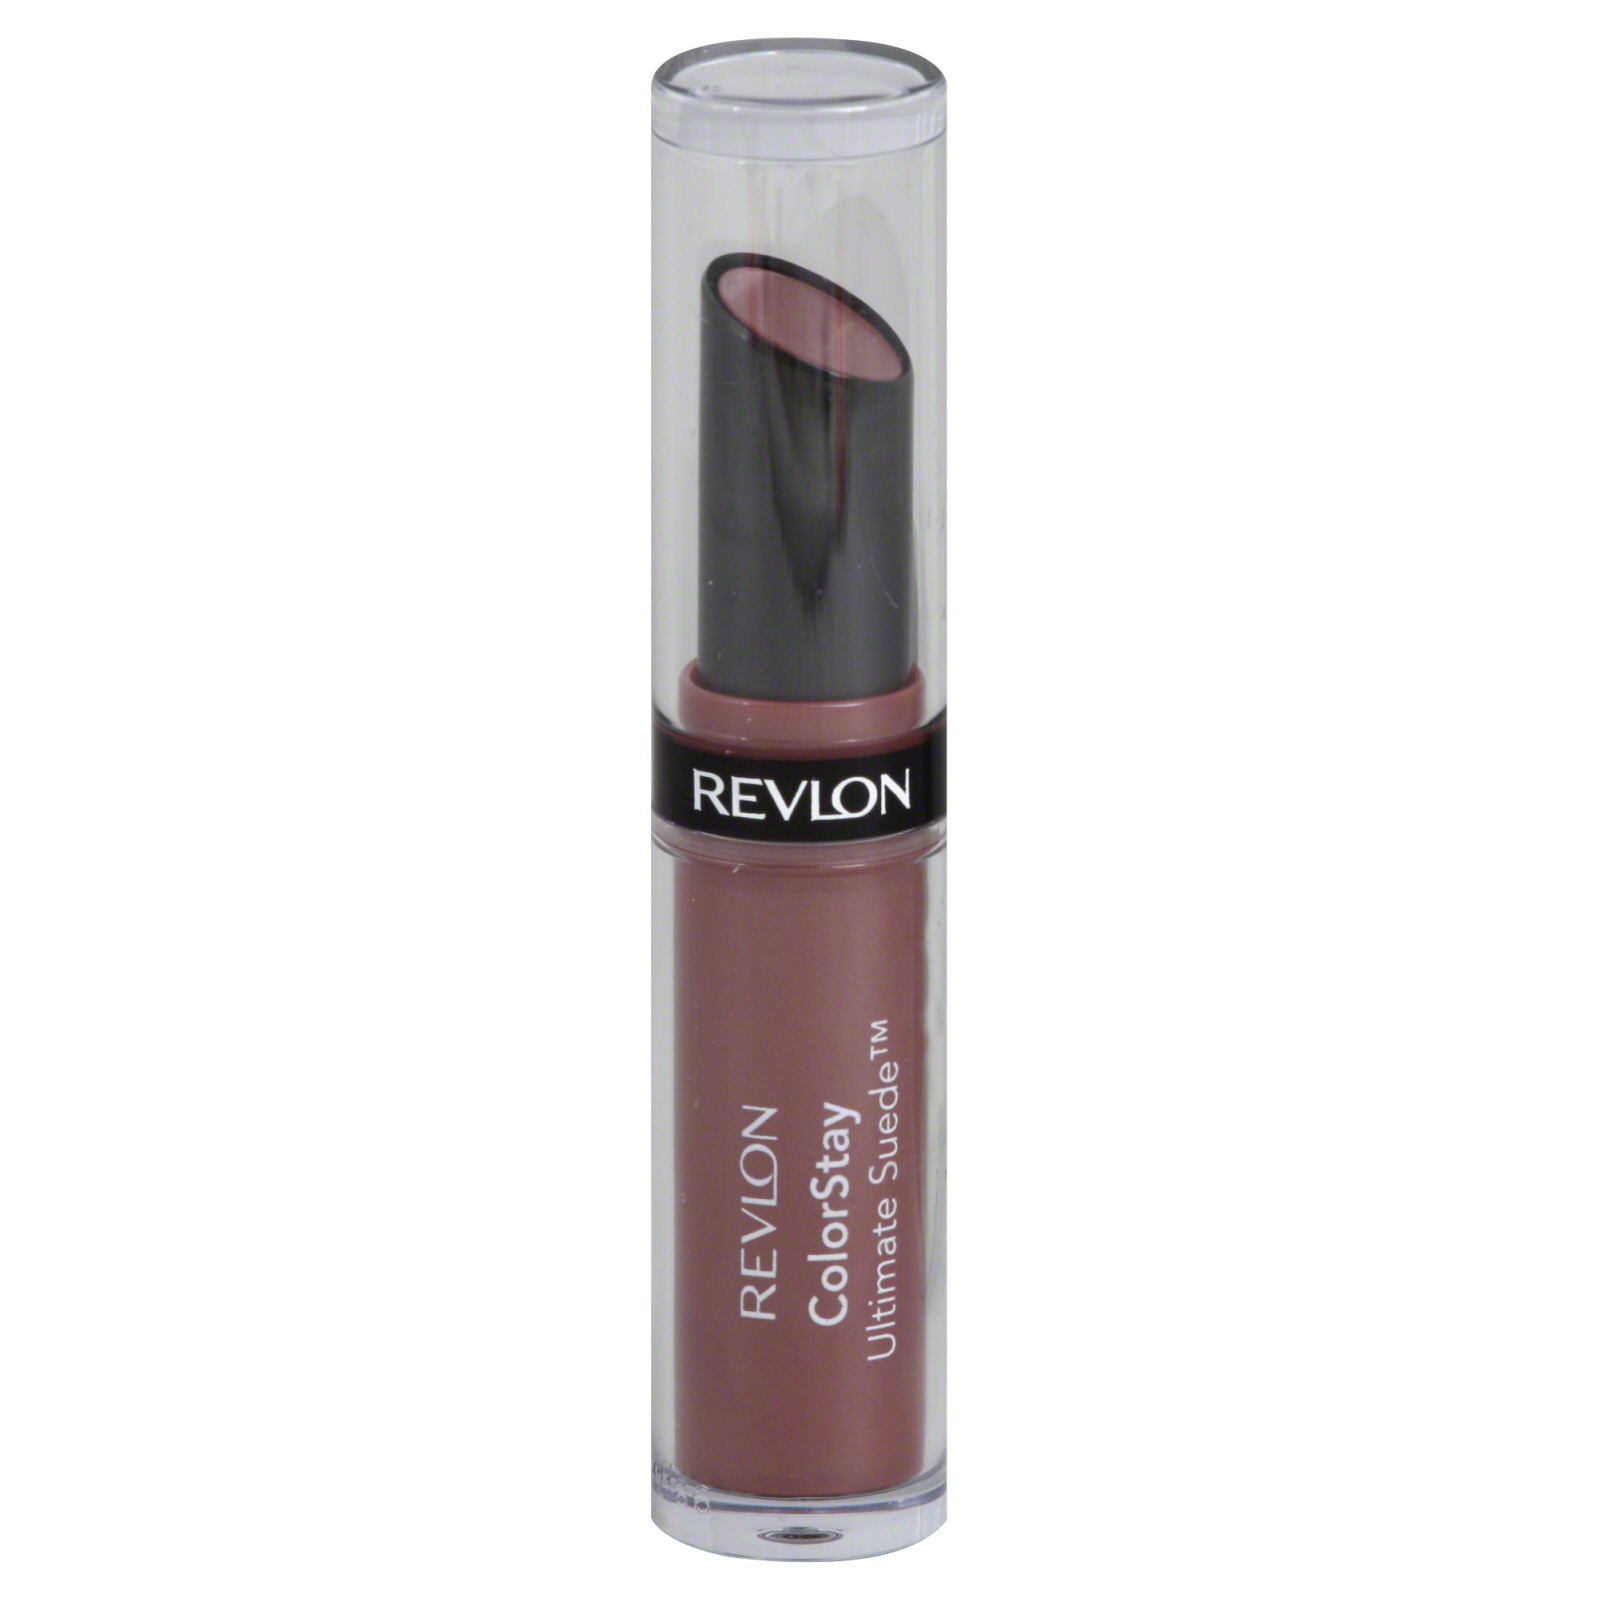 ColorStay Ultimate Suede Lipstick, Supermodel 045, 0.09 oz (2.55 g)